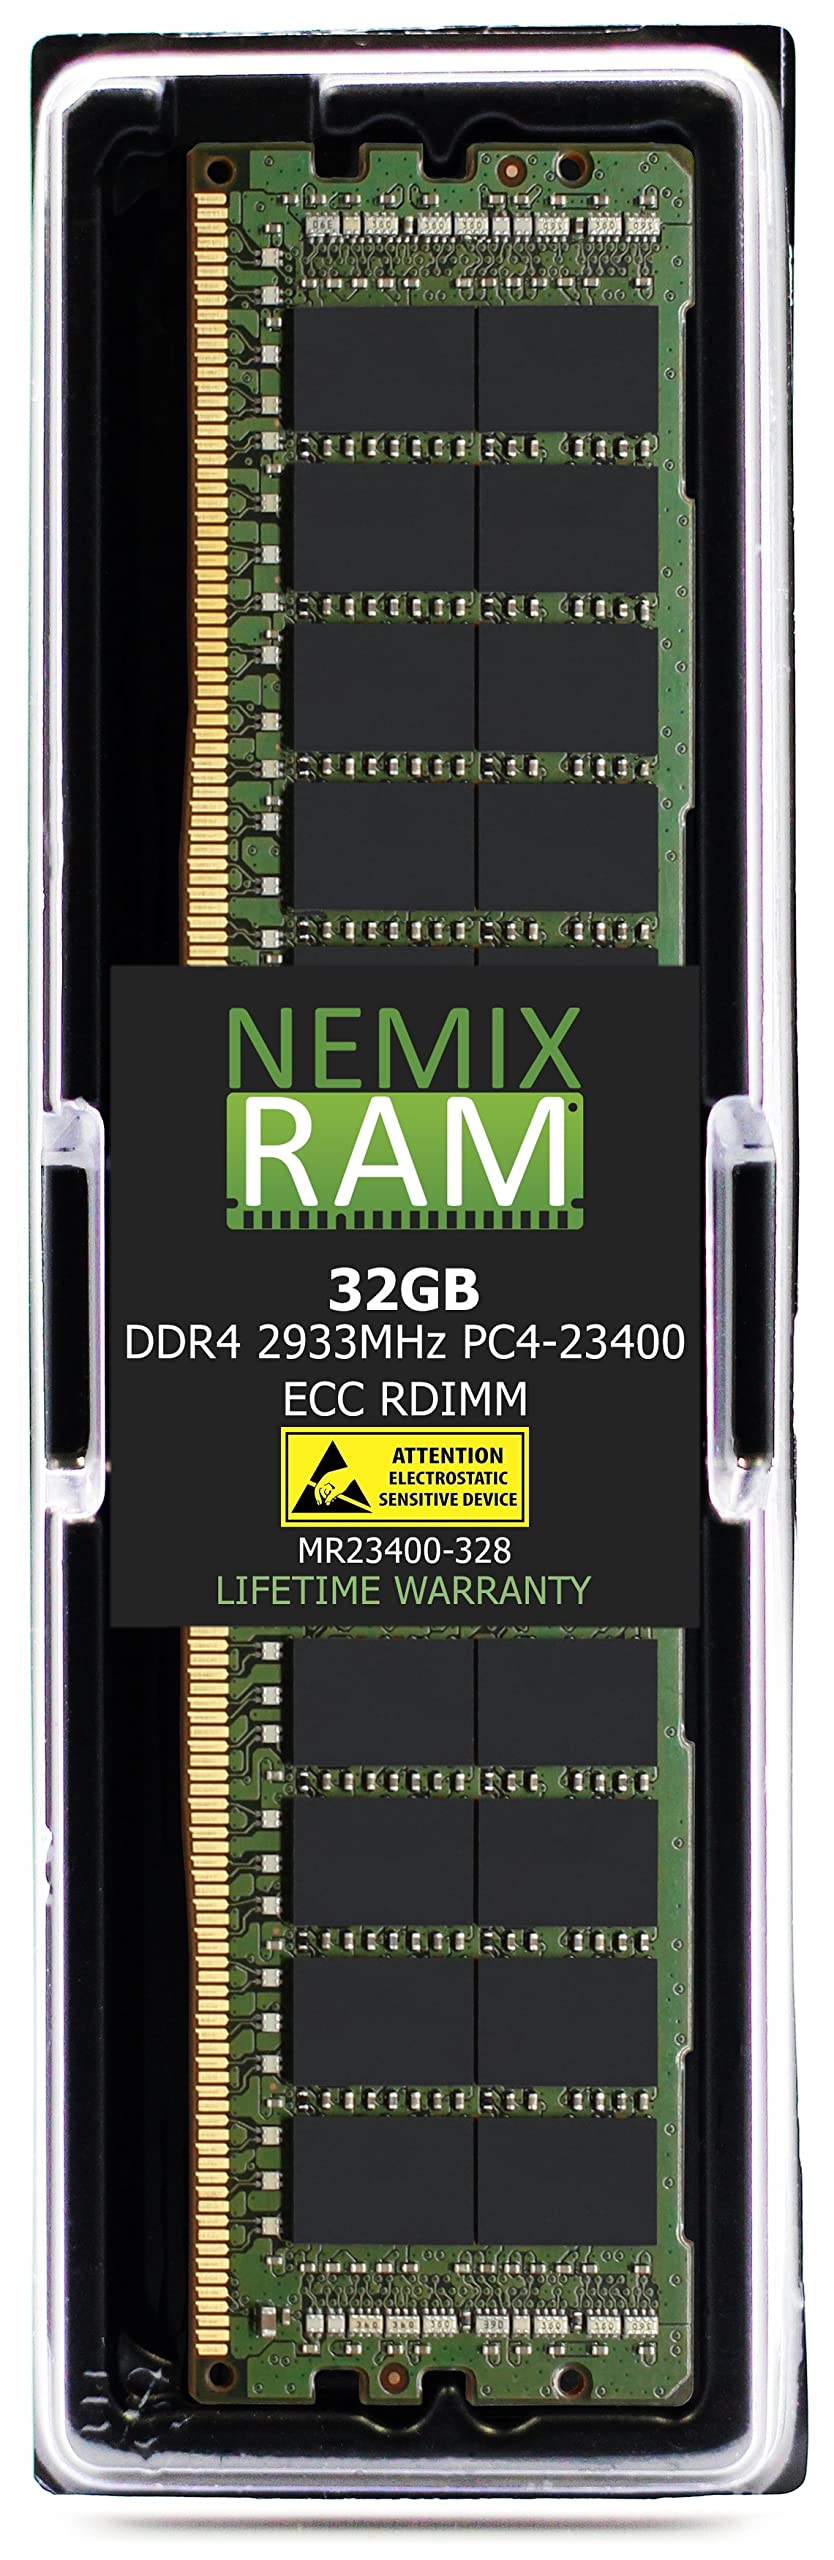 NEMIX RAM Supermicro MEM-DR432MD-ER29 32GB DDR4-2933 PC4-23400 RDIMM レジスタードメモリアップグレードモジ